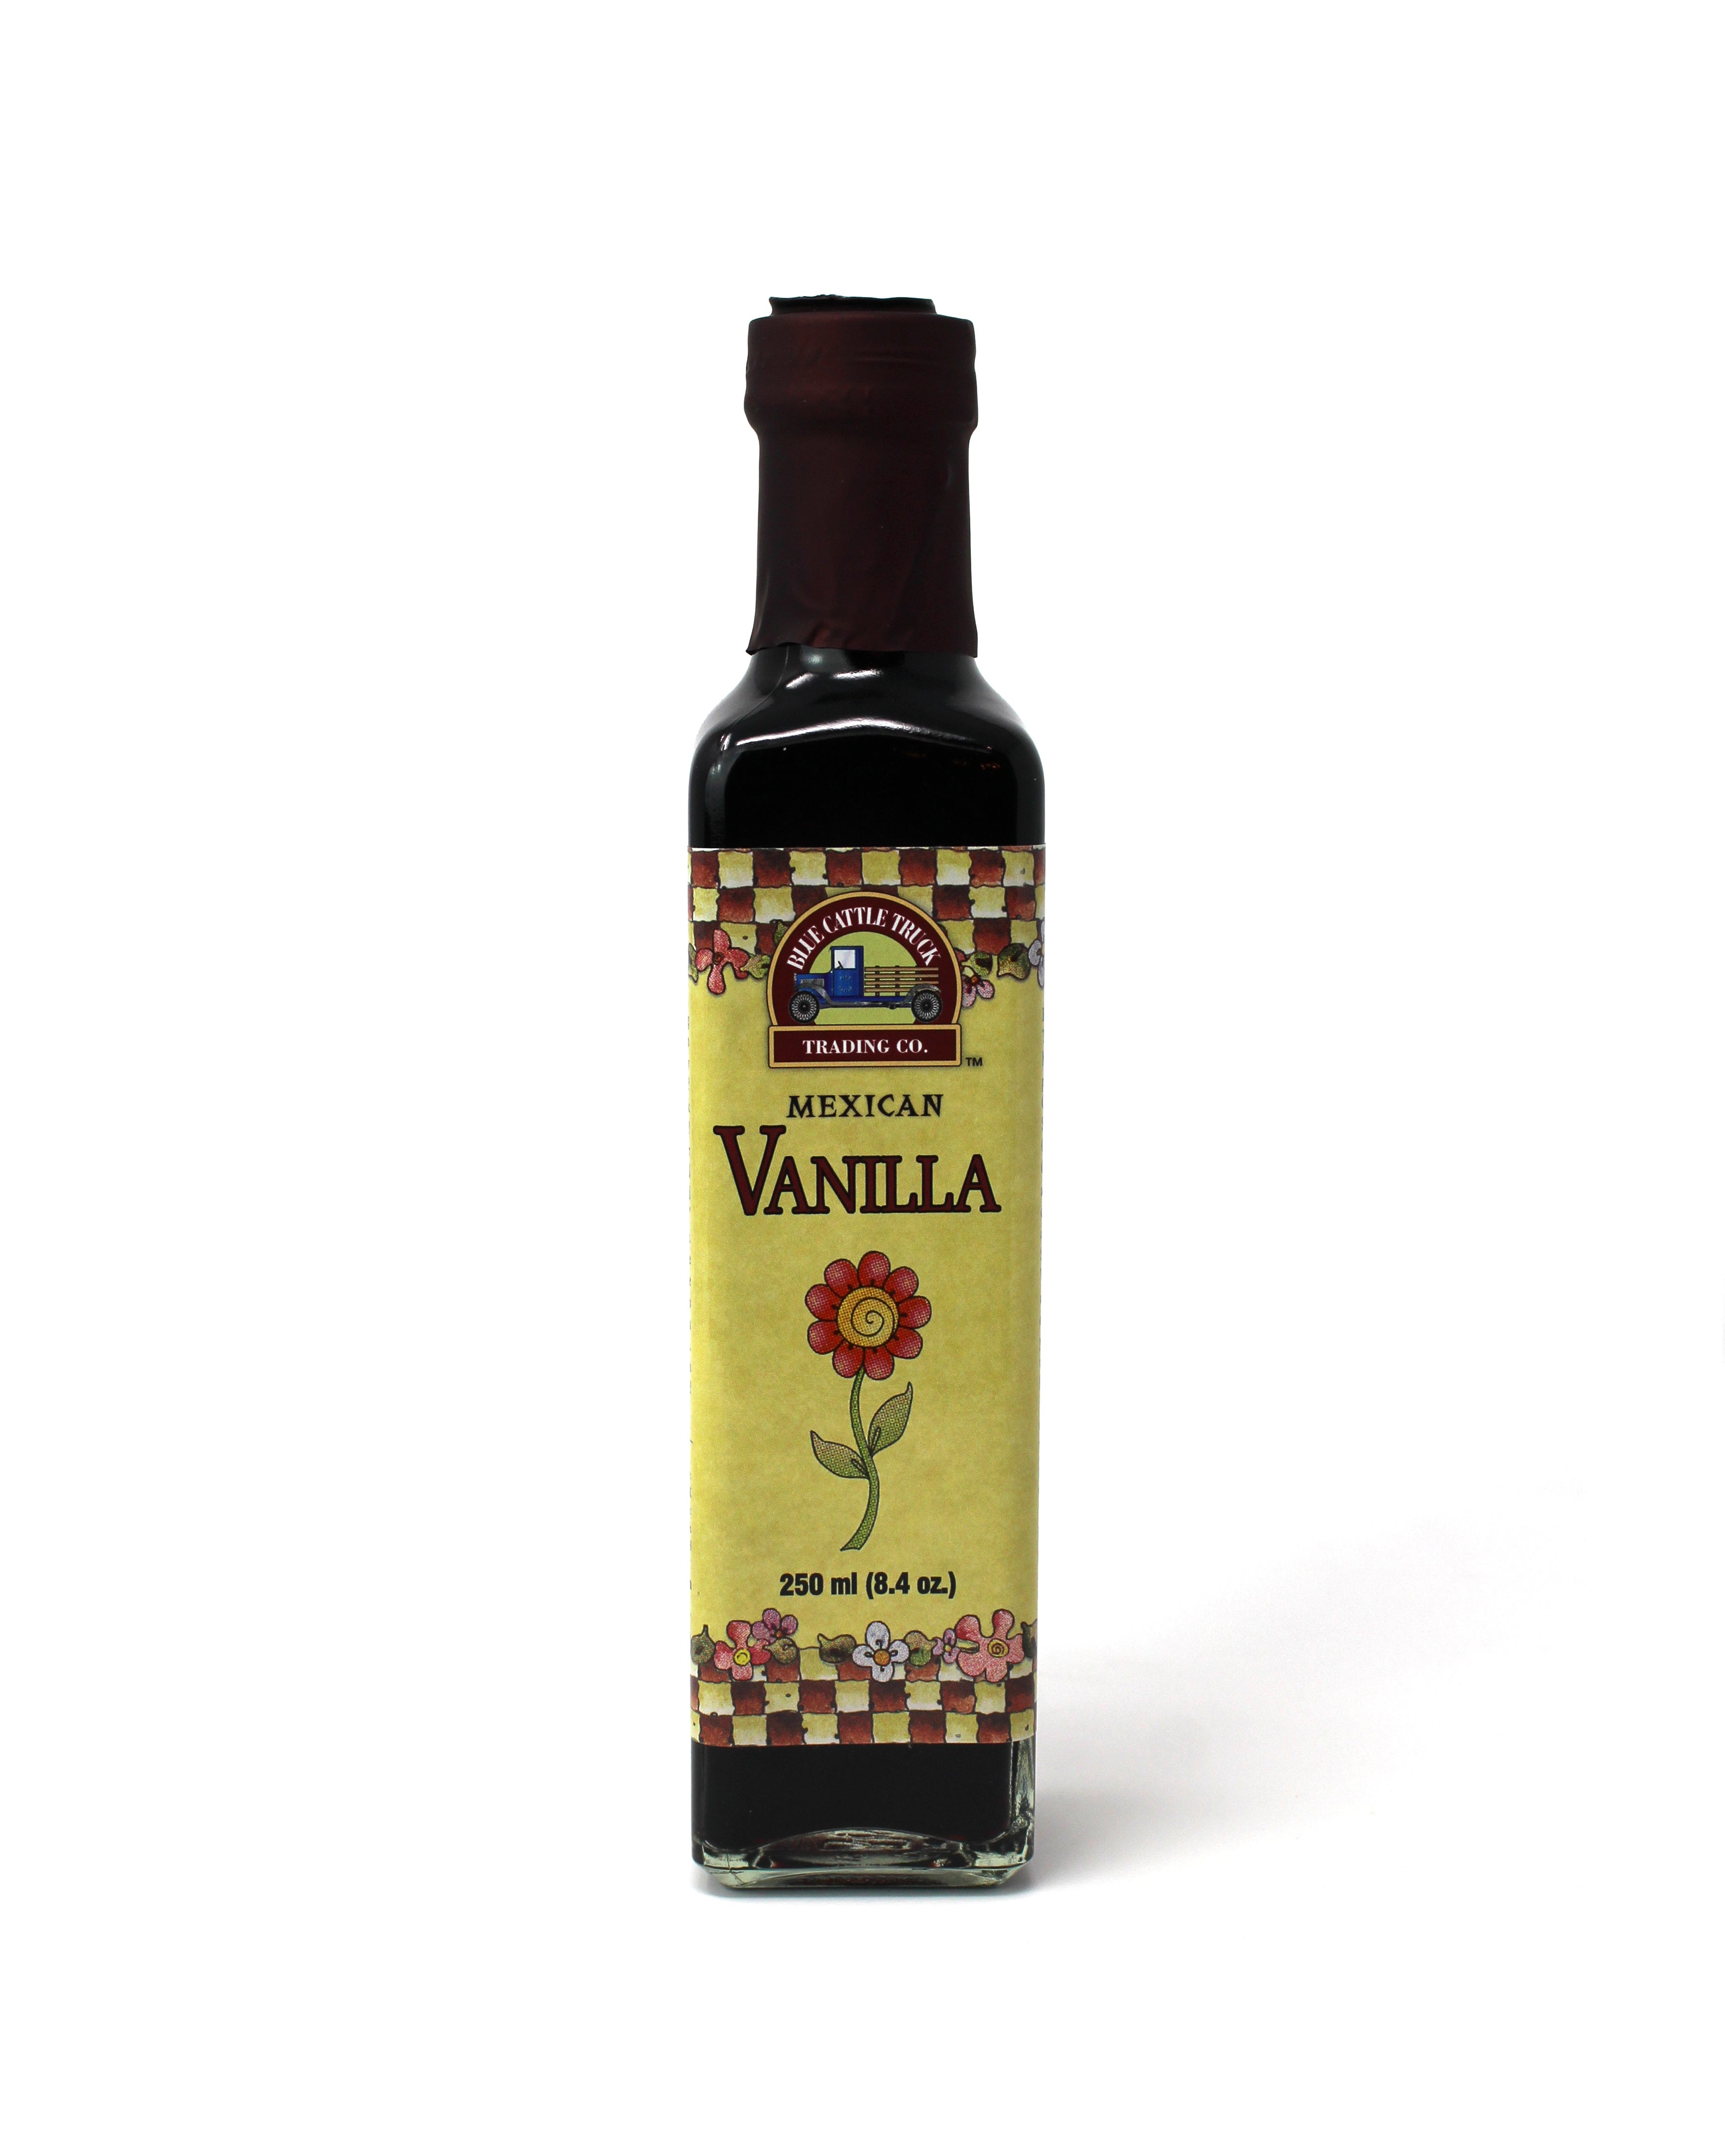 Mexican Vanilla Bean Extract